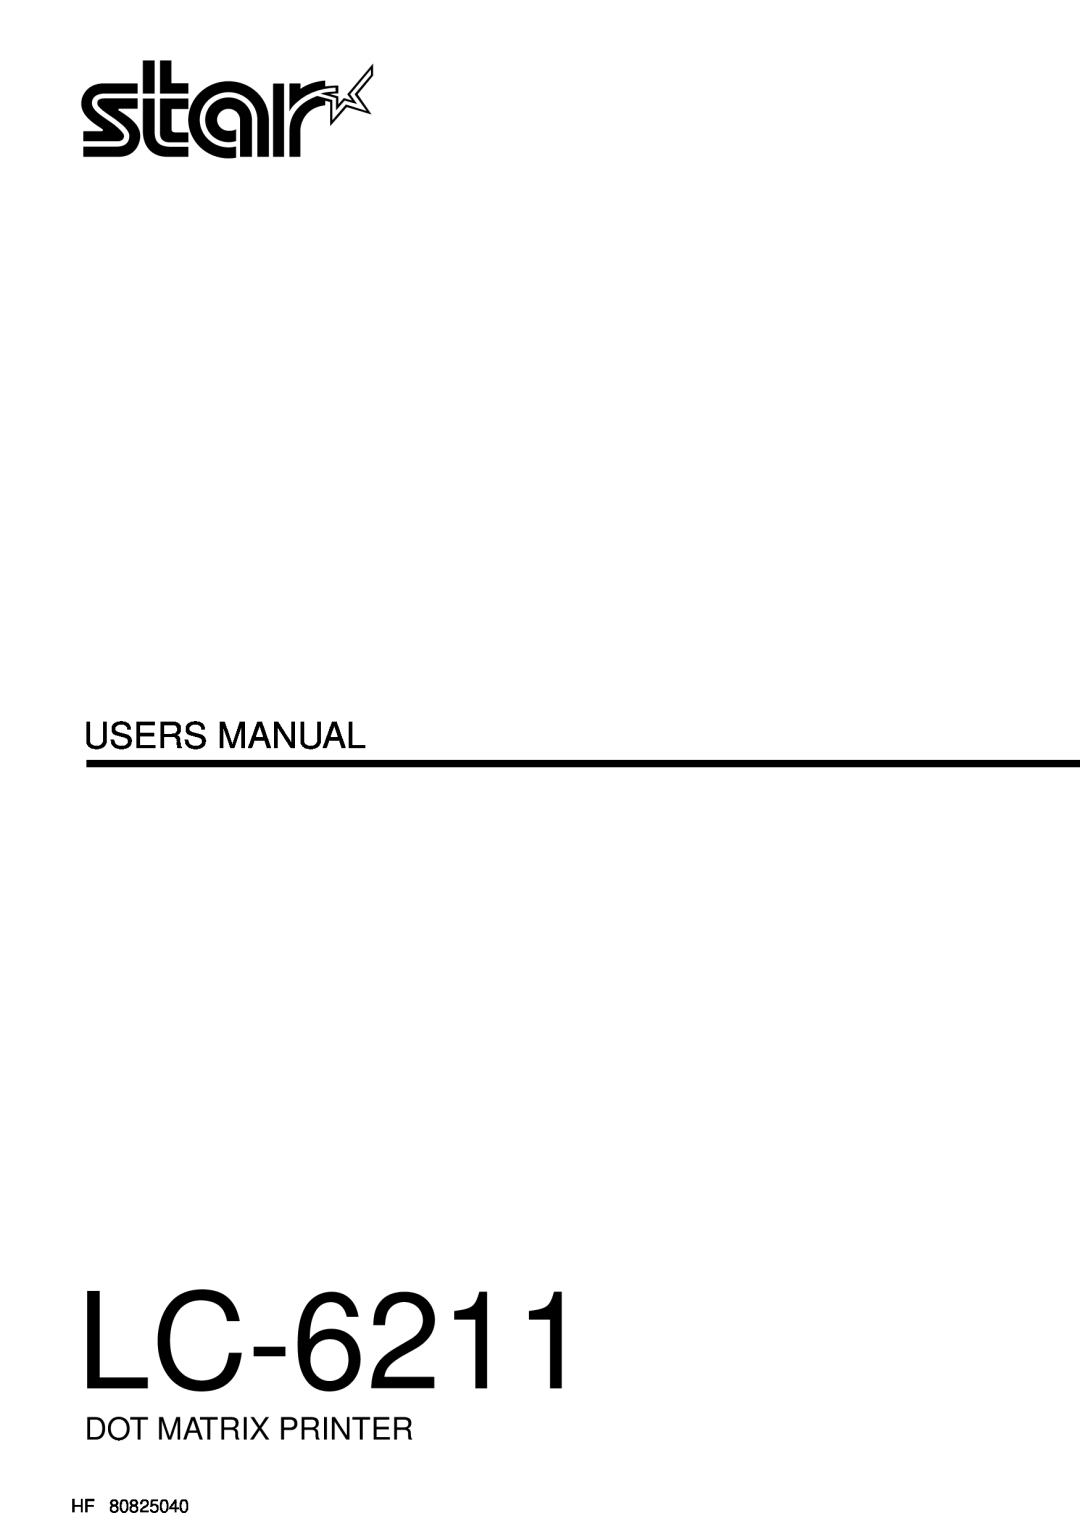 Star Micronics LC-6211 user manual Users Manual, Dot Matrix Printer 